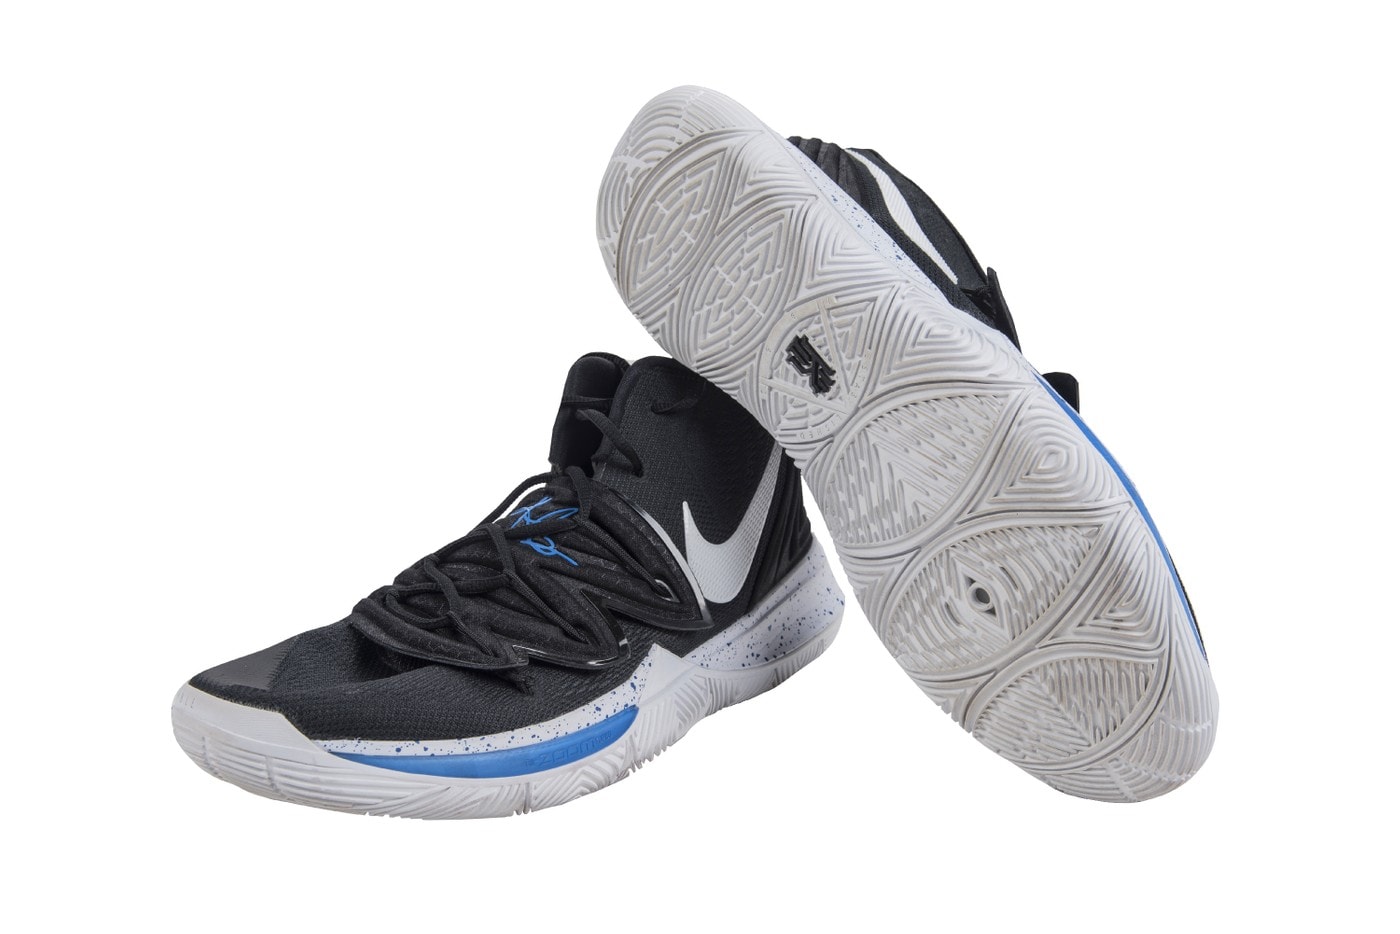 Zion Williamson 著用 Nike Kyrie 5 拍賣近 $20,000 美元